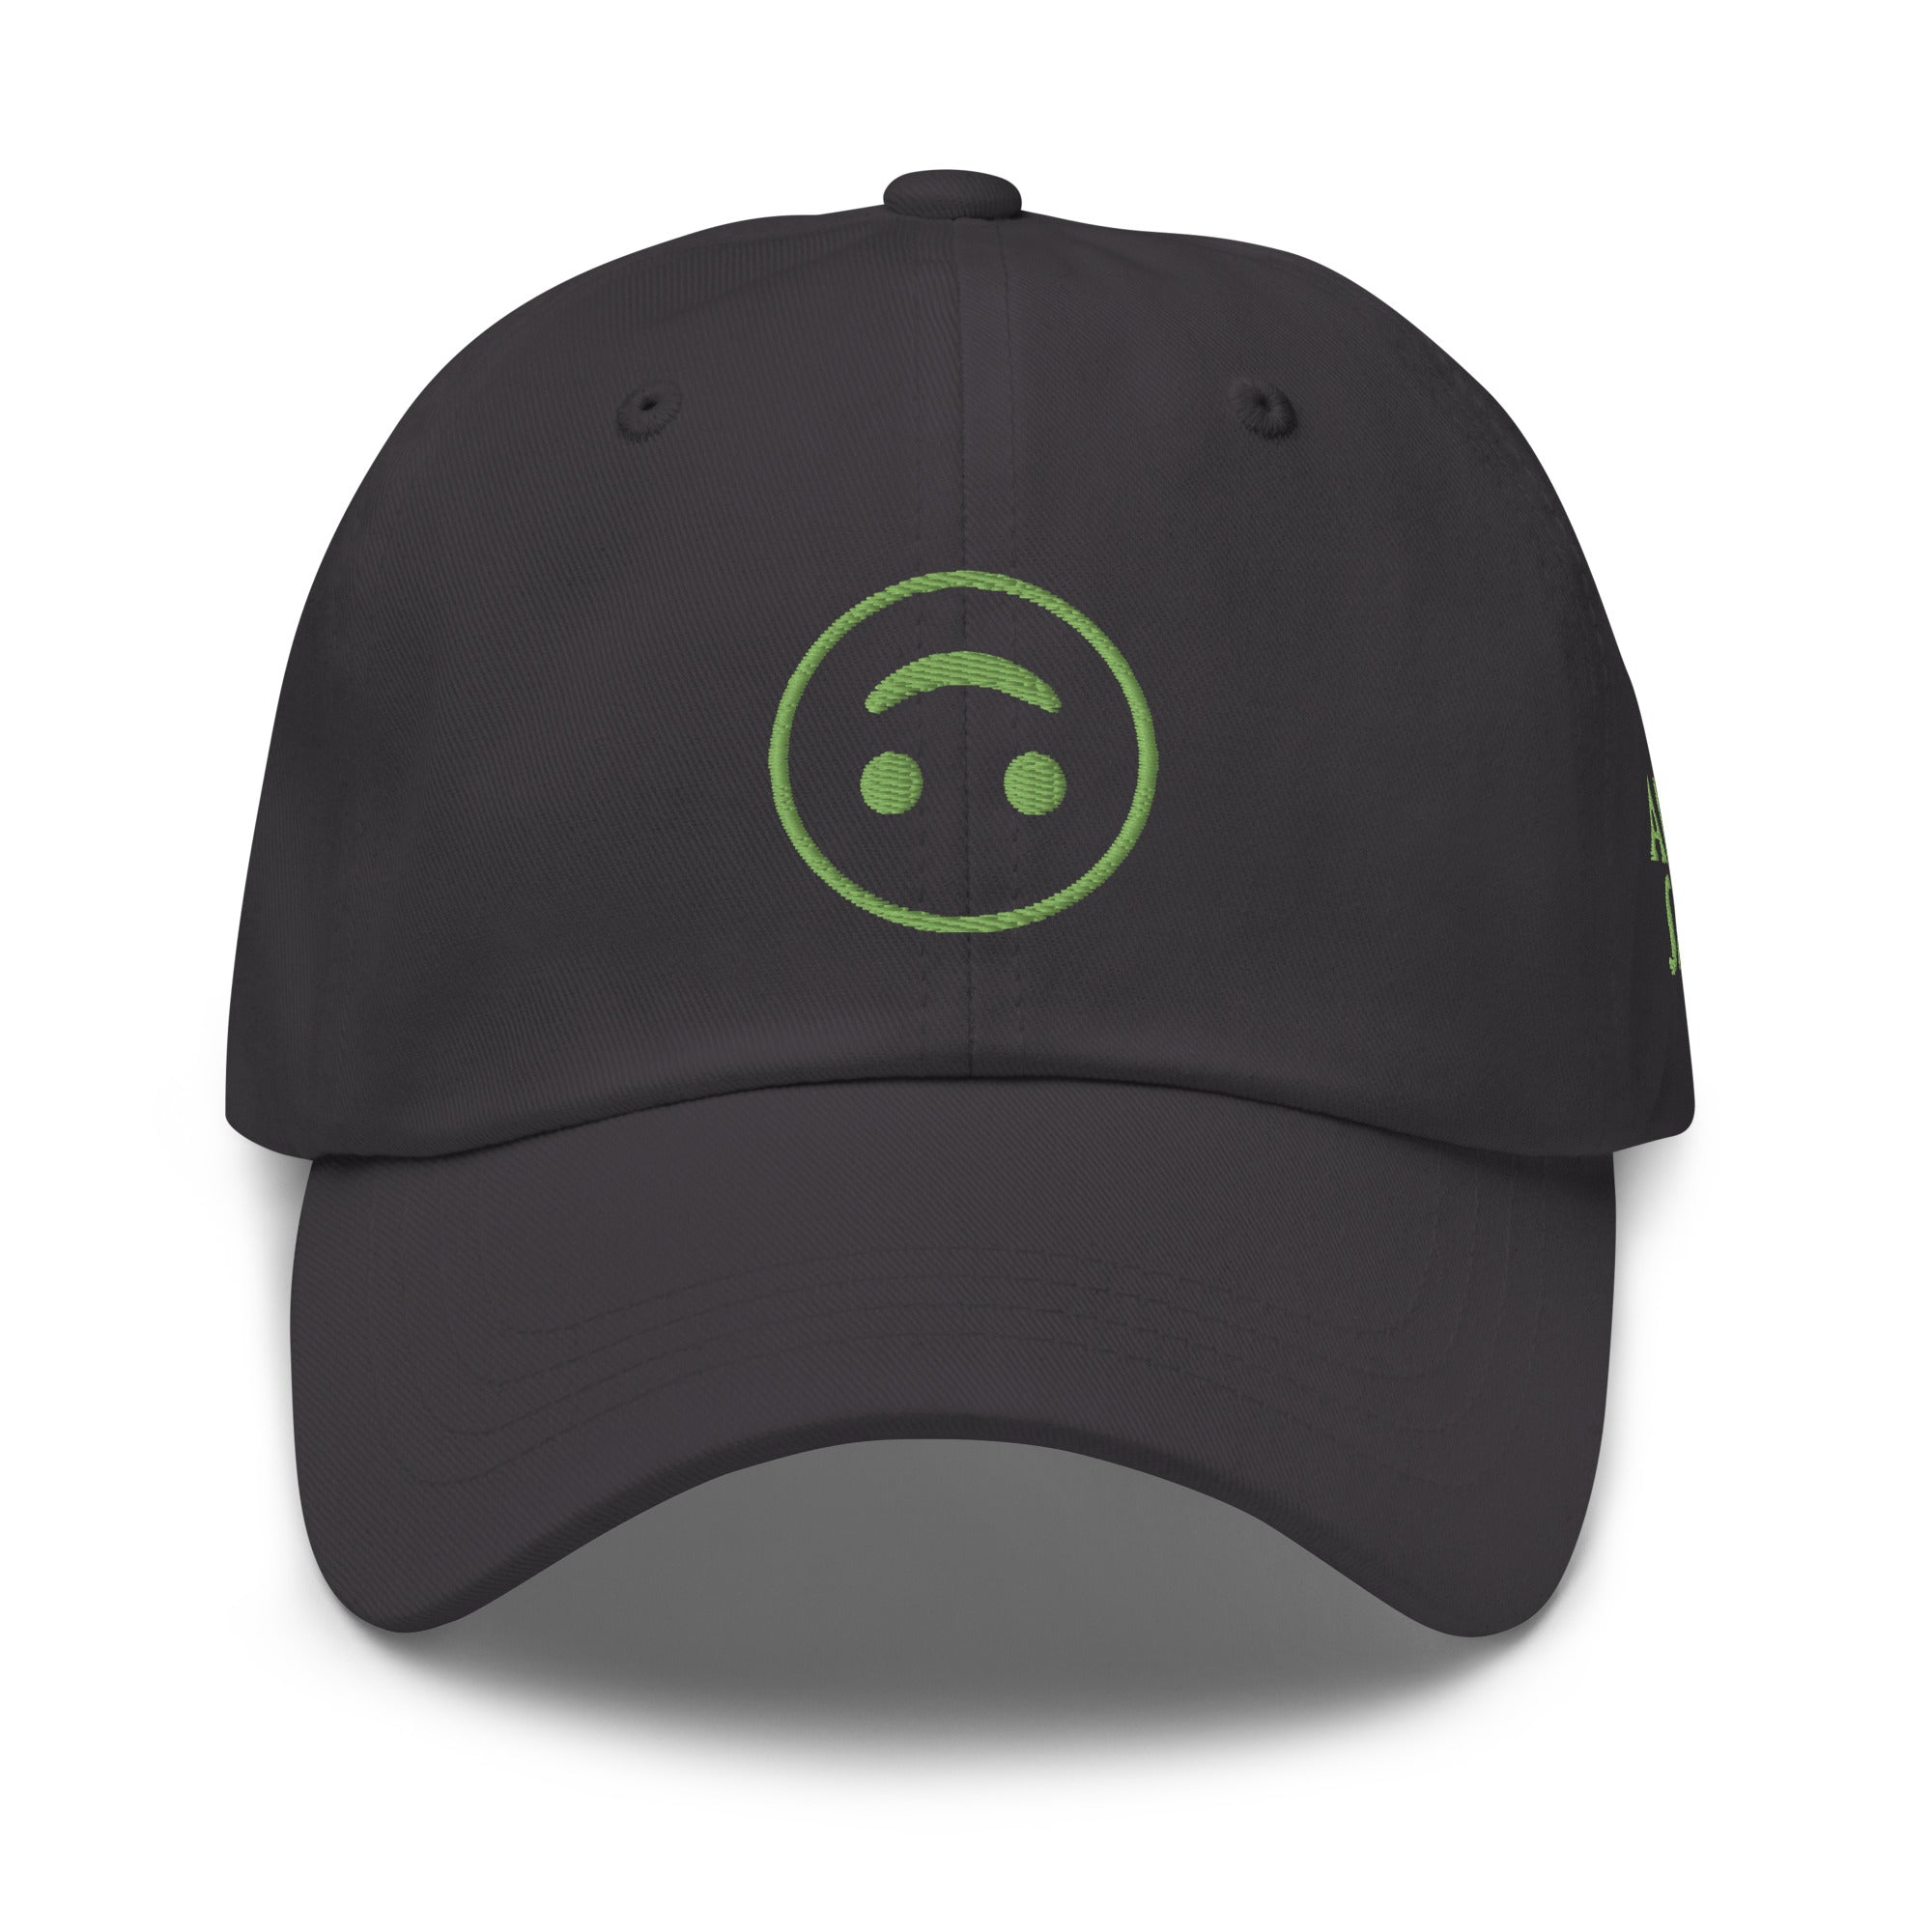 Amber Smilezz Green Logo Hat